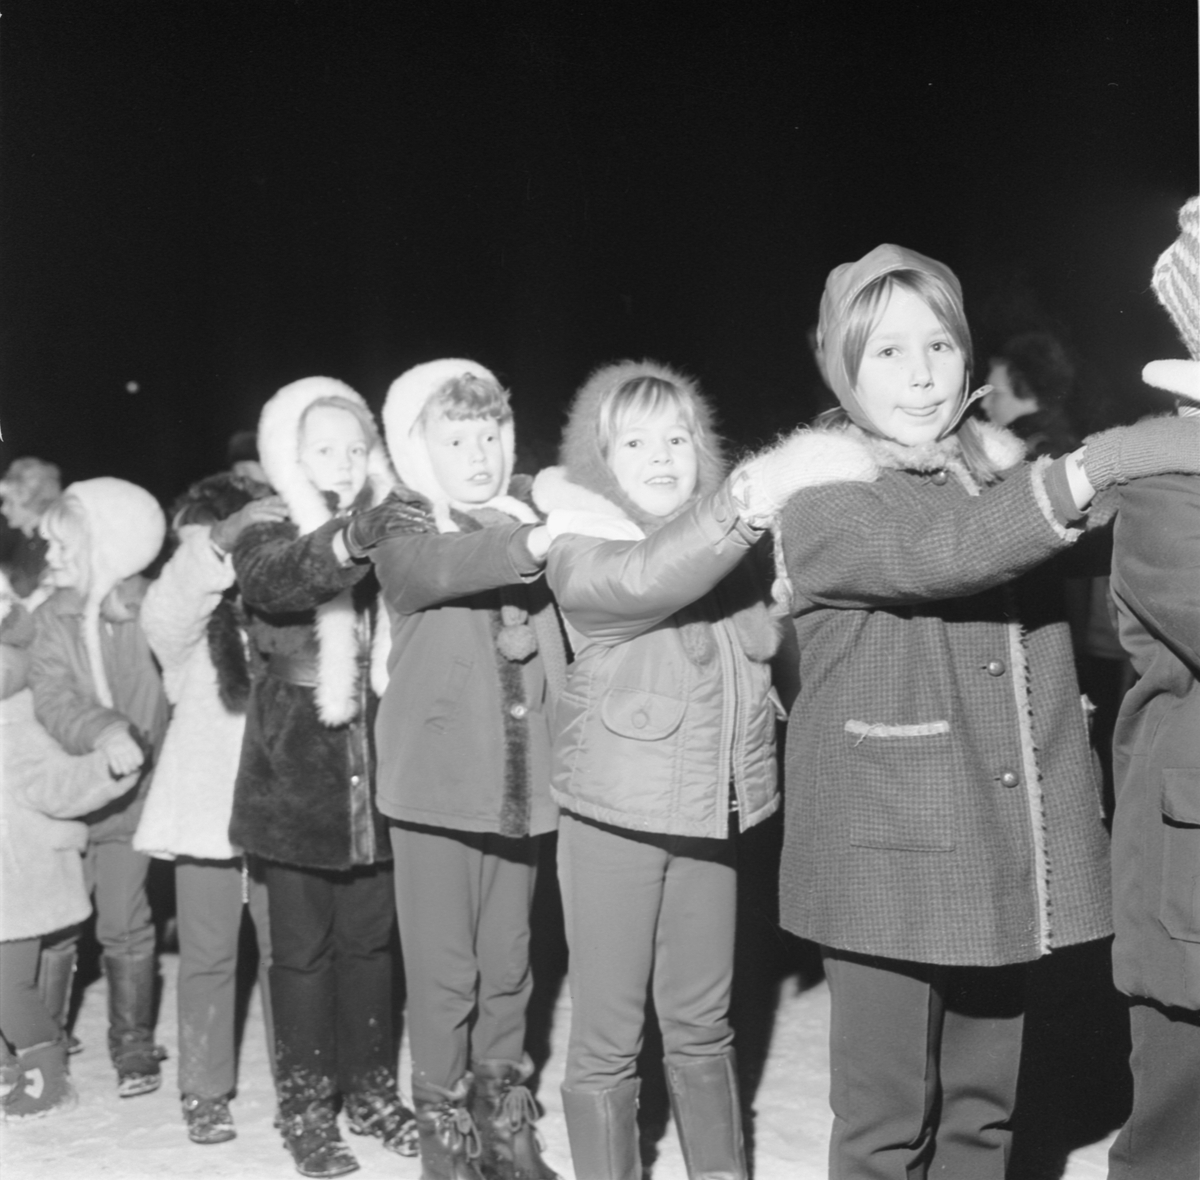 Stora torgdansen i Tierp, Uppland 1970